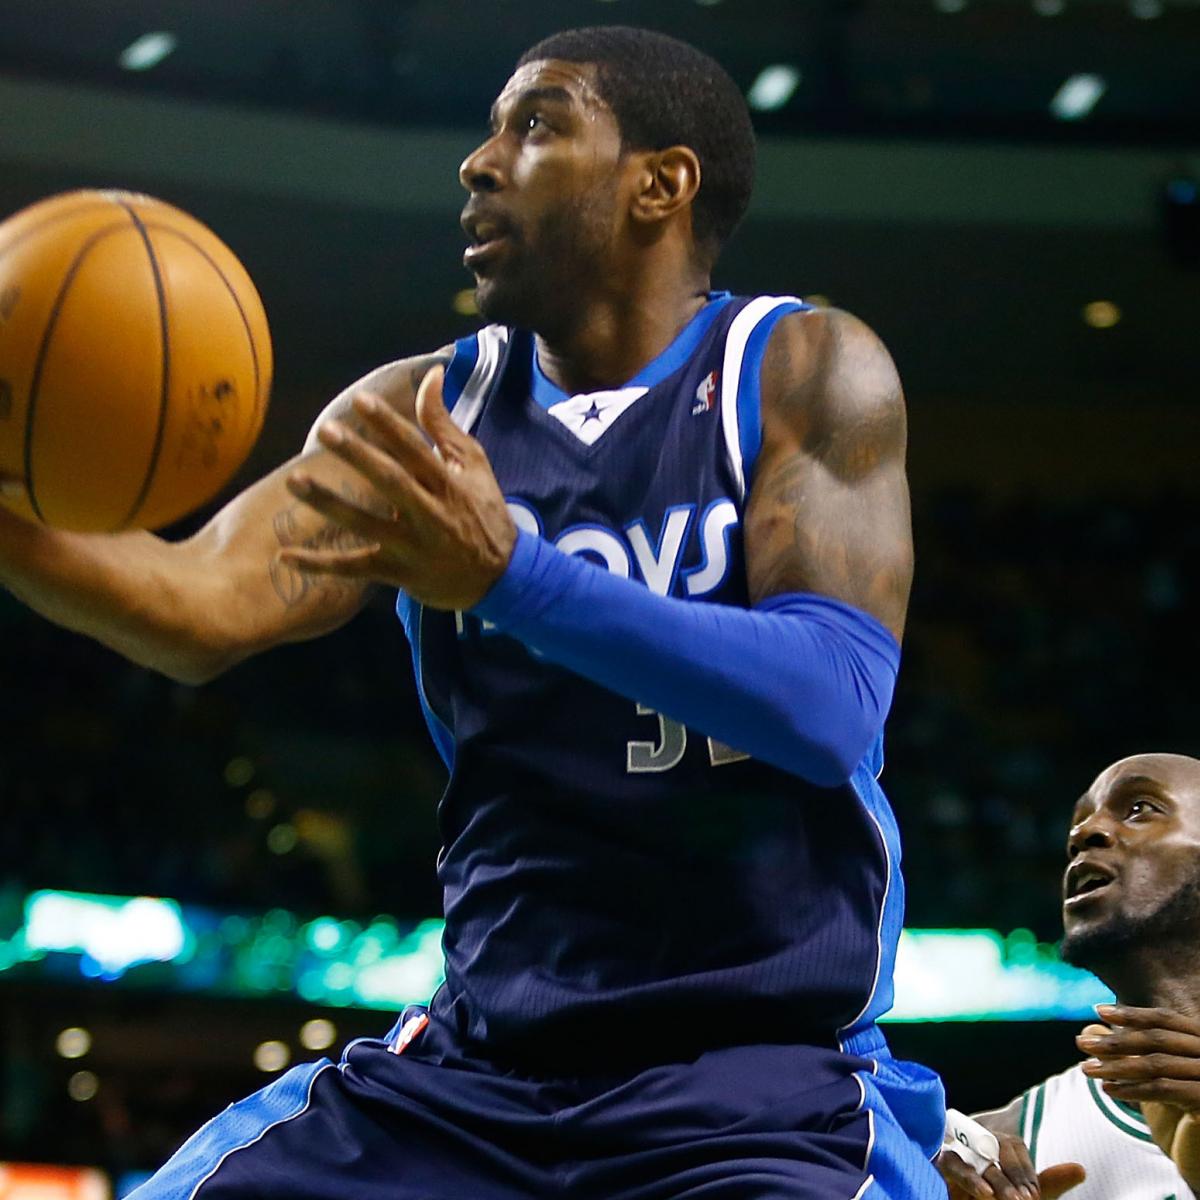 Handicapping Dallas Mavericks Players' Odds of Making the 2013 NBA All